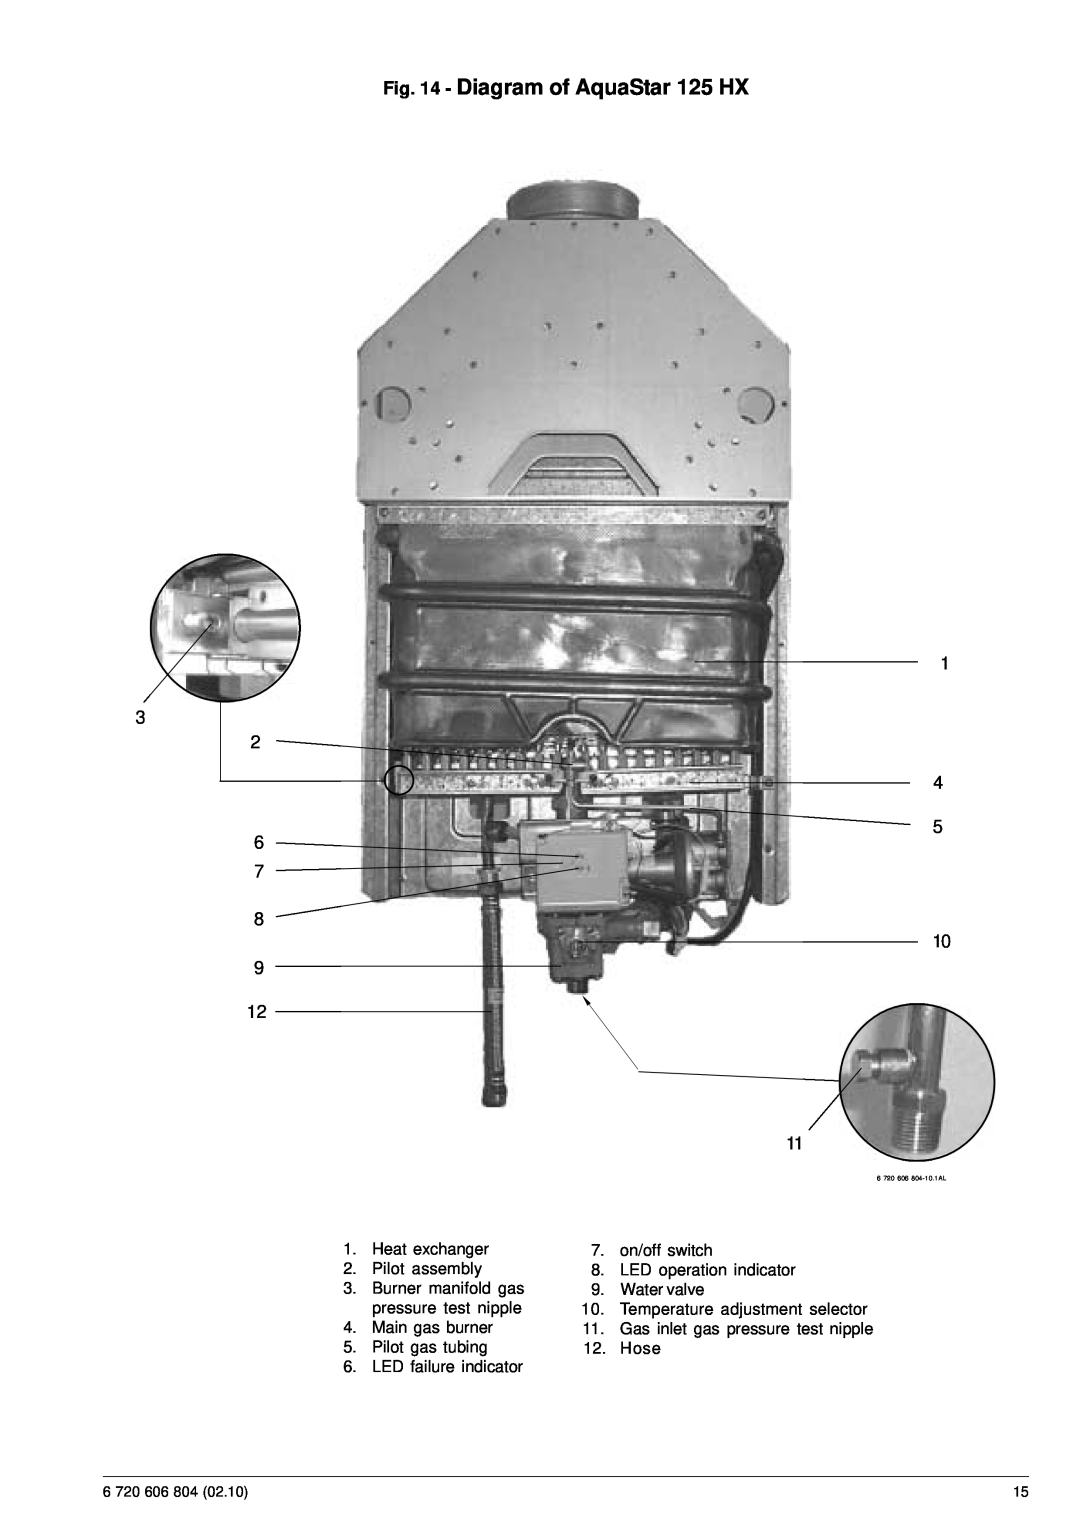 Bosch Appliances 125HX NG Diagram of AquaStar 125 HX, Heat exchanger 2. Pilot assembly, Temperature adjustment selector 